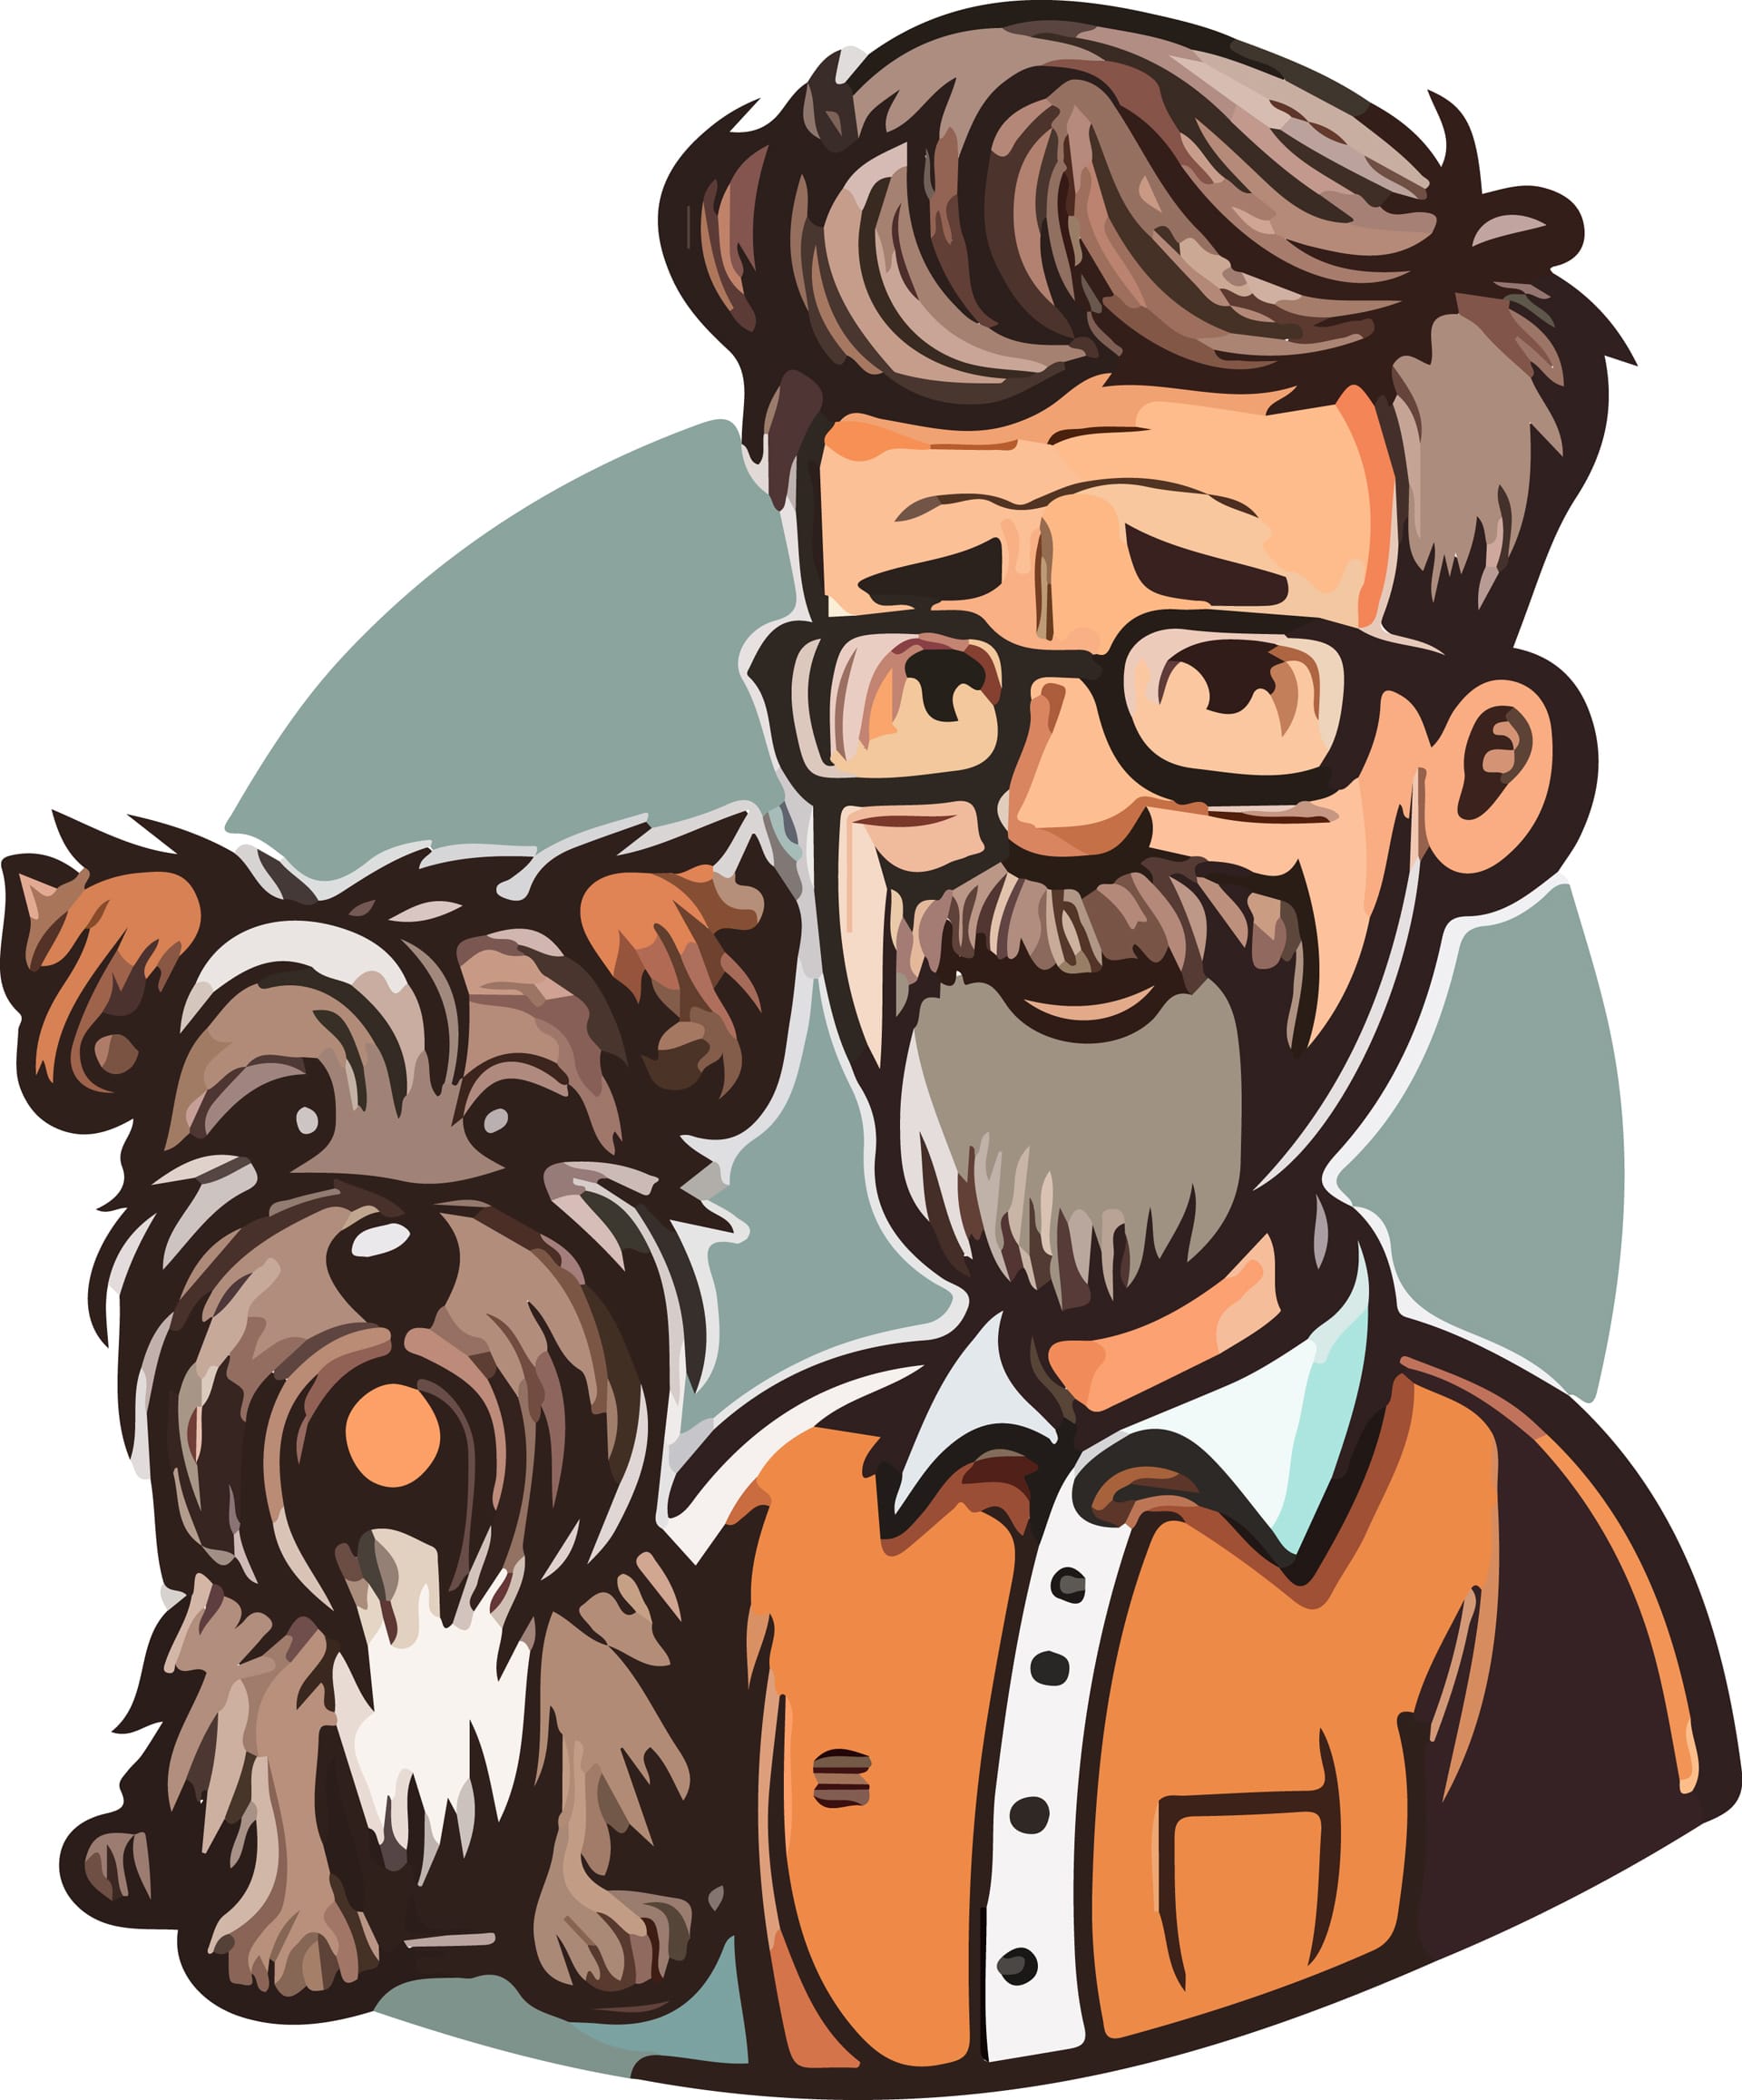 Cute dog man illustration image